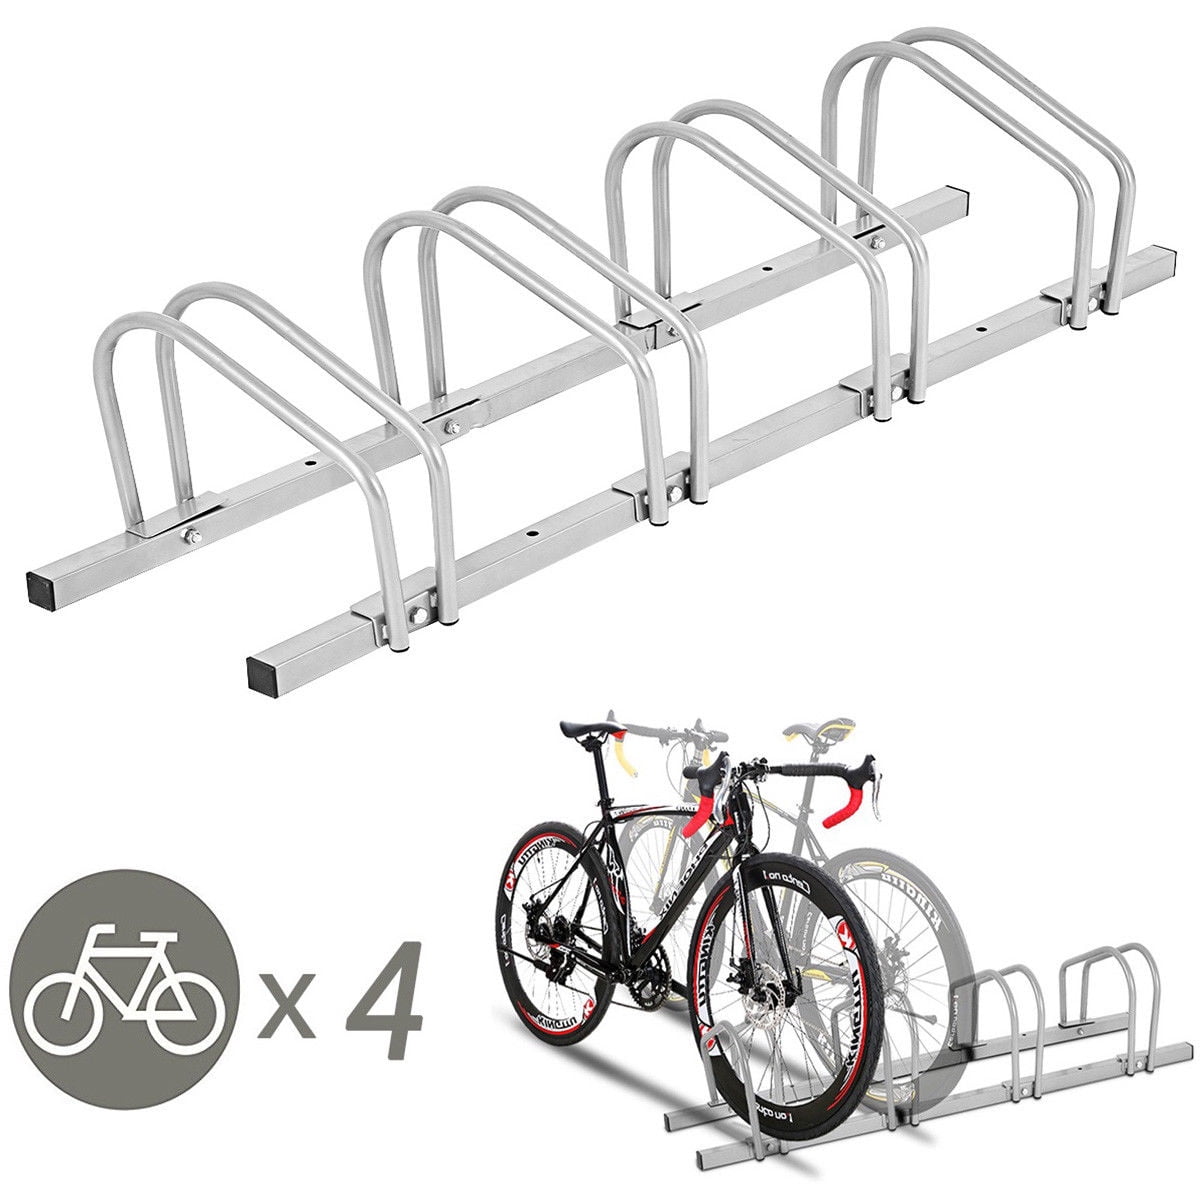 iclbc Bike Rack Garage 6 Bicycle Stand Steel Bike Storage Adjustable Bike Parking Rack Silver 